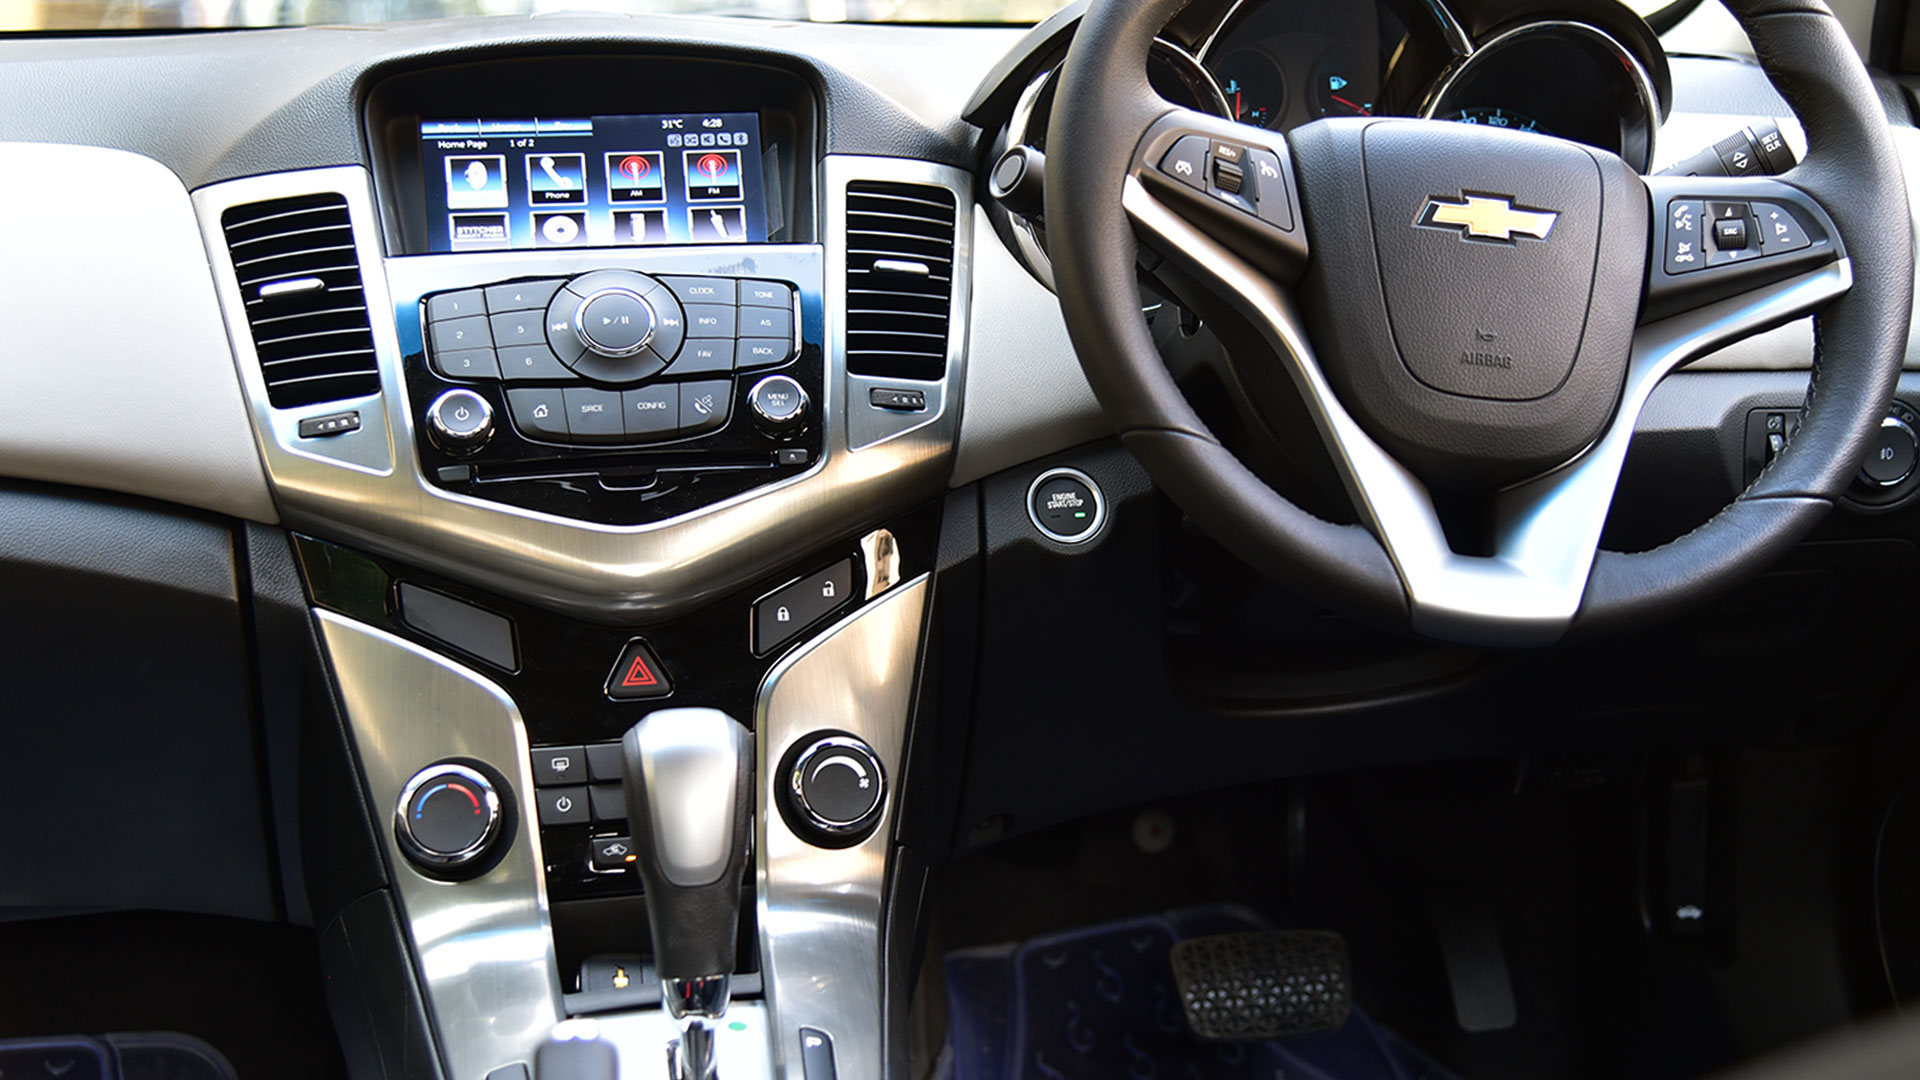 Chevrolet Cruze 2016 LTZ Interior Car Photos - Overdrive